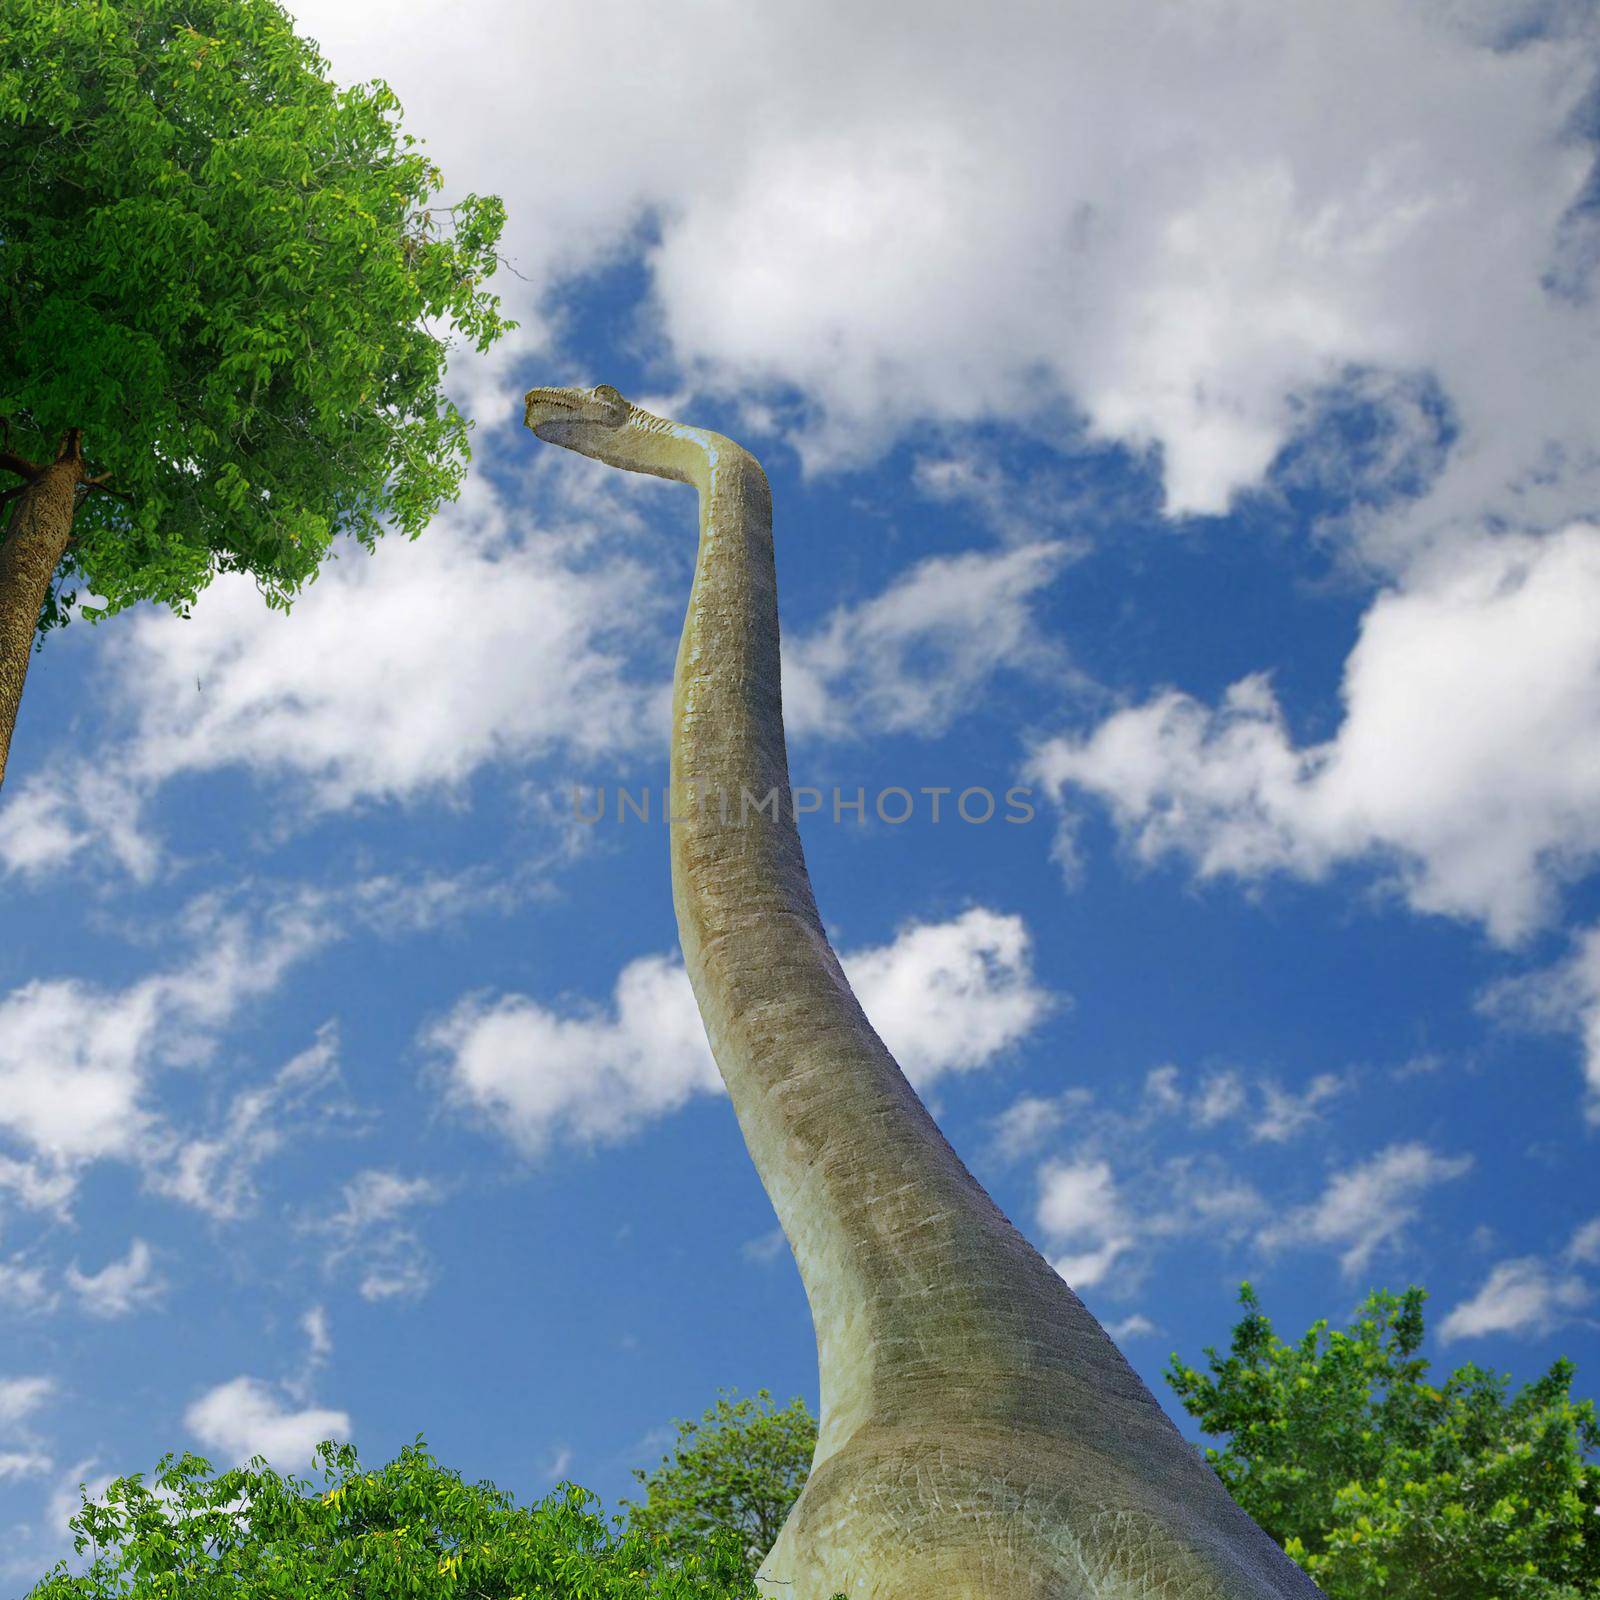 Dinosaur live image by barks